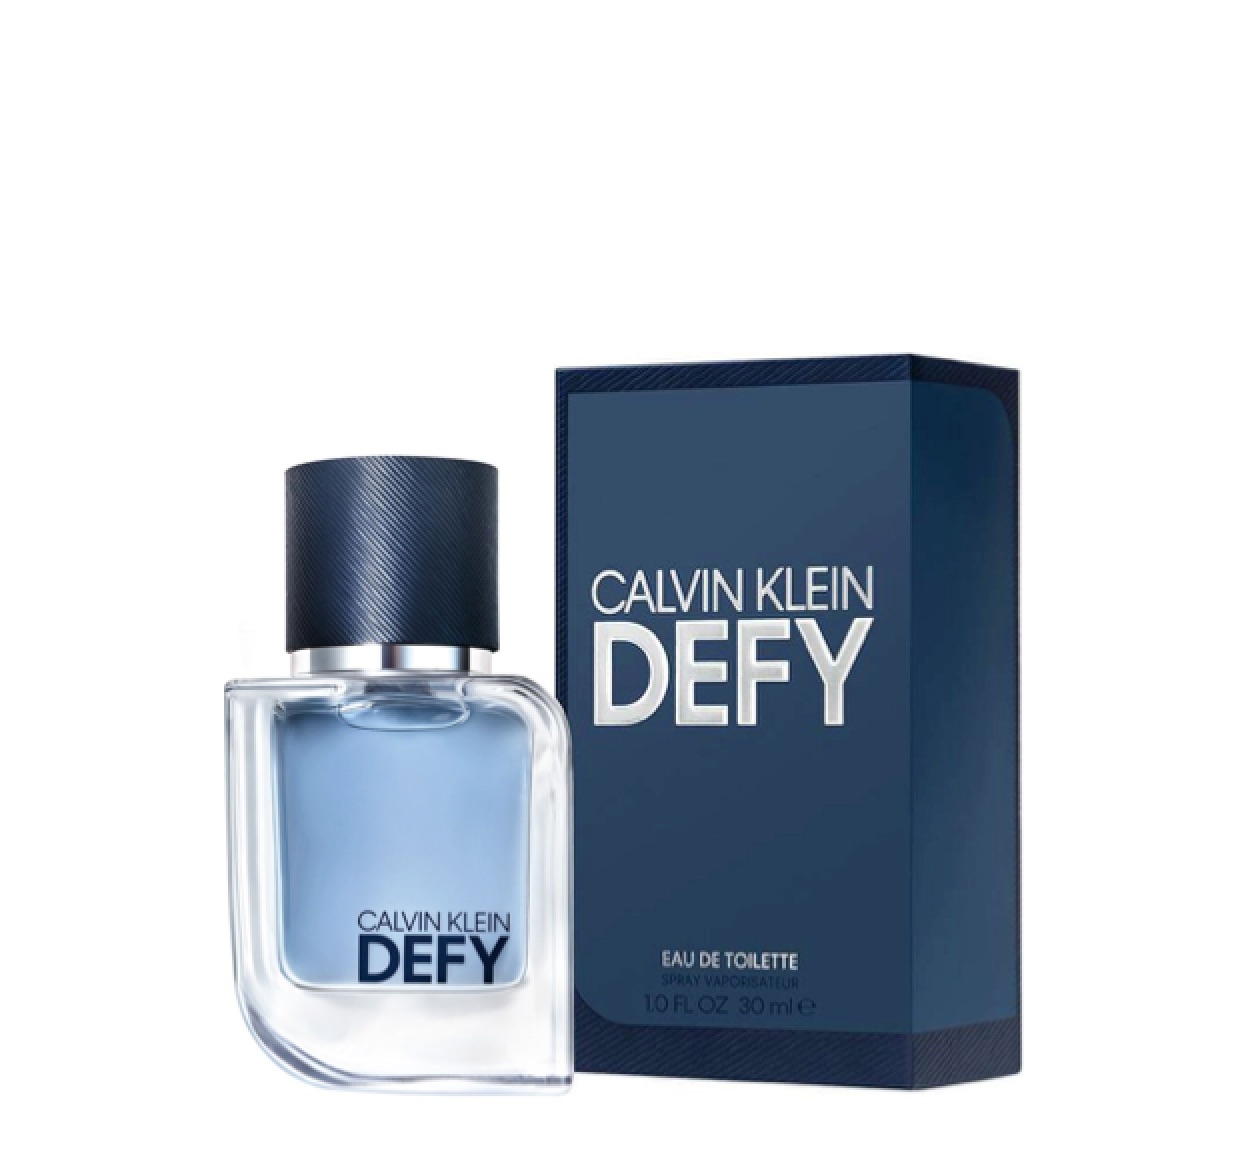 Calvin Klein Defy Eau de Toilette 30ml – Perfume Essence